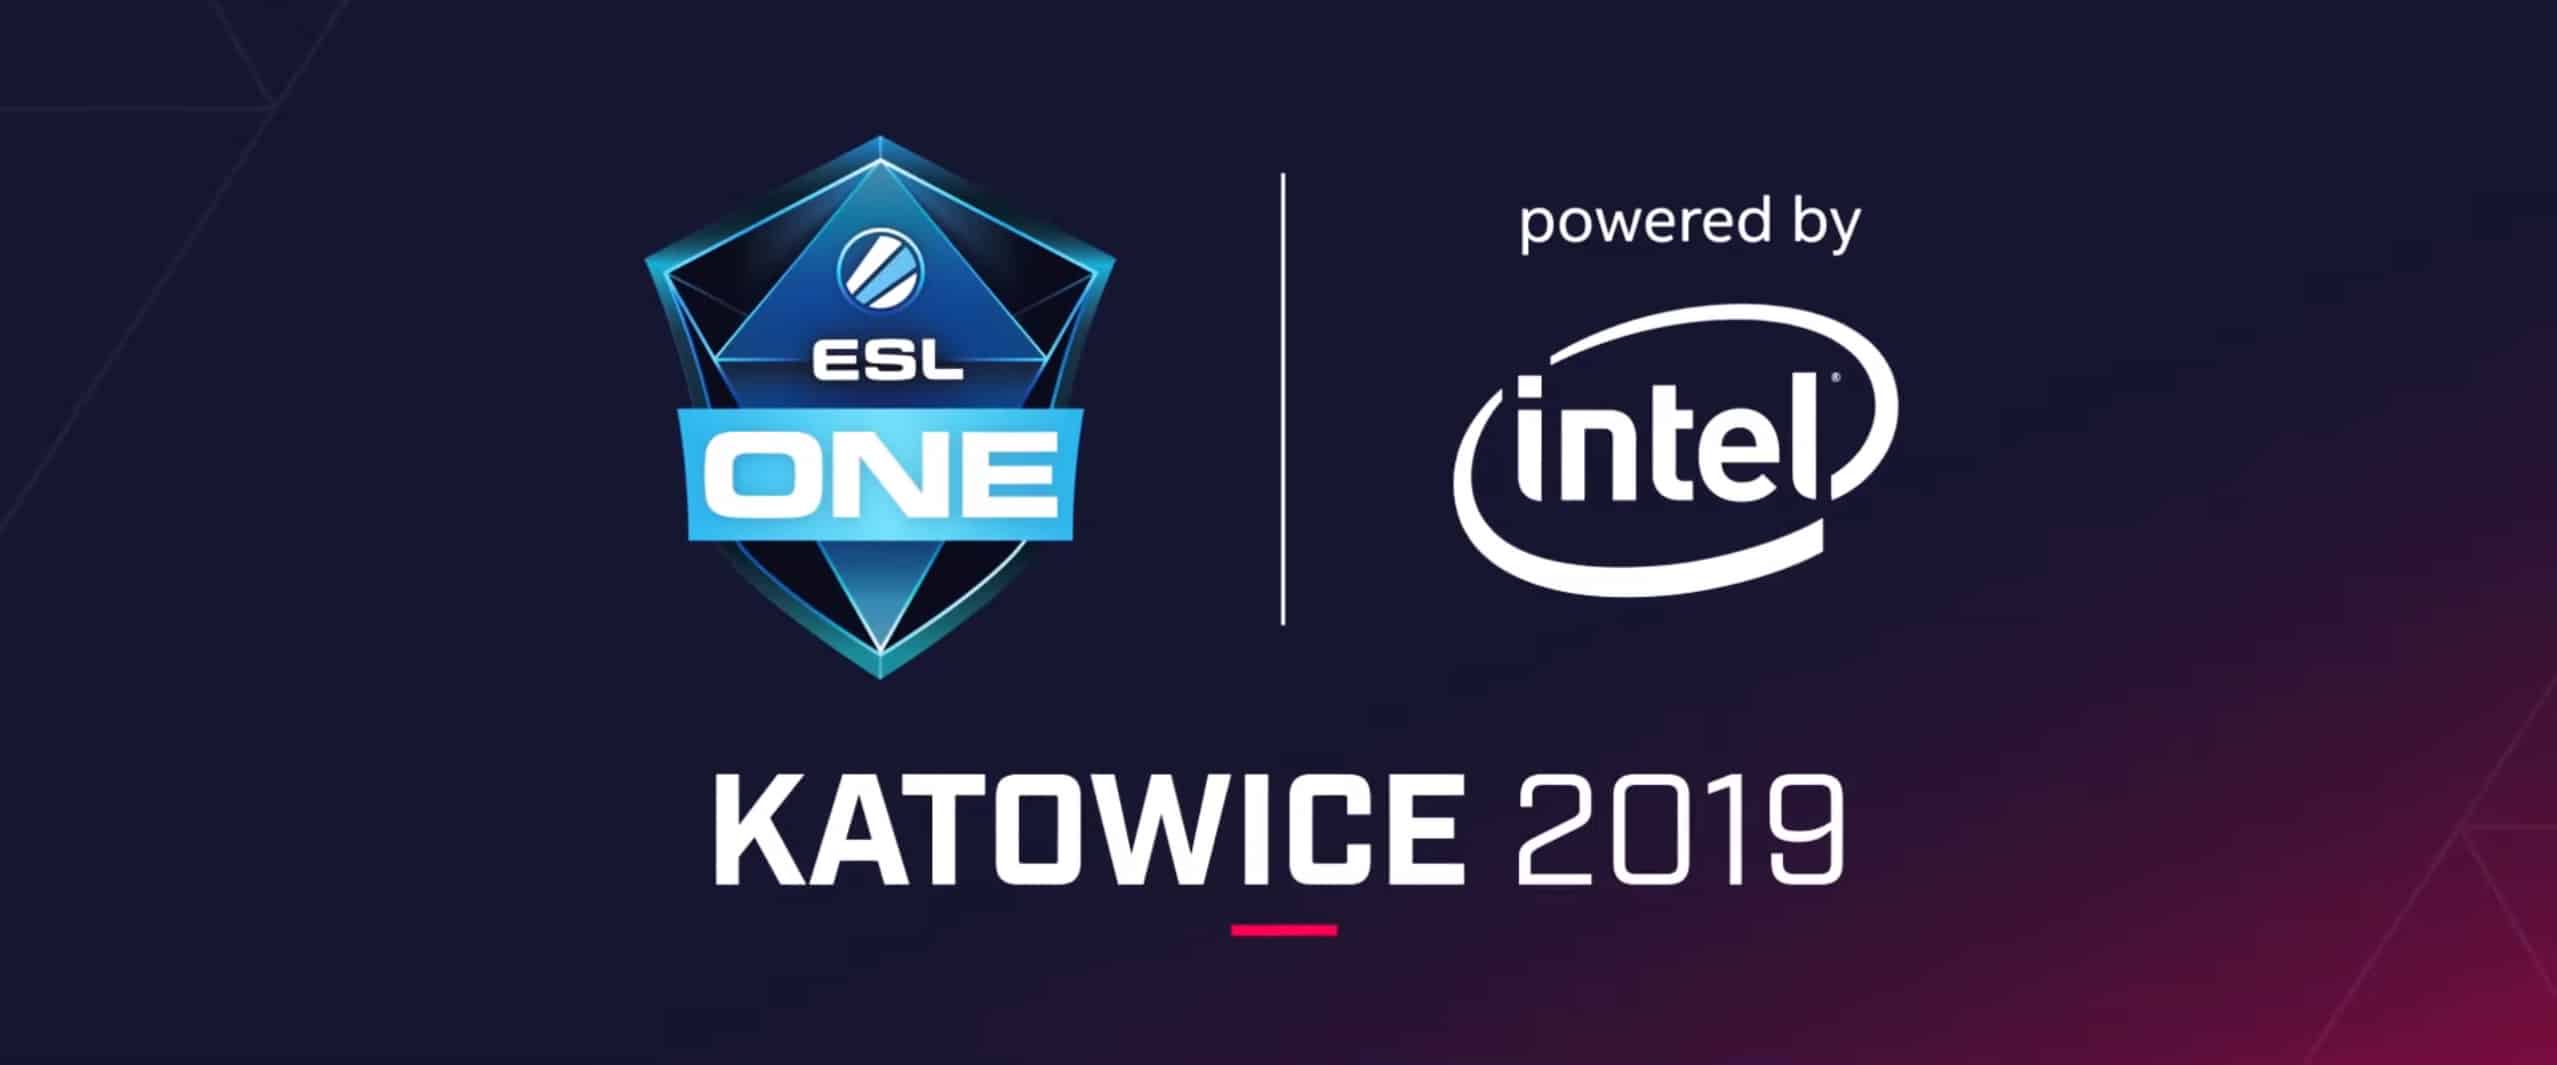 Katowice 2019 ESL ONE INTEL